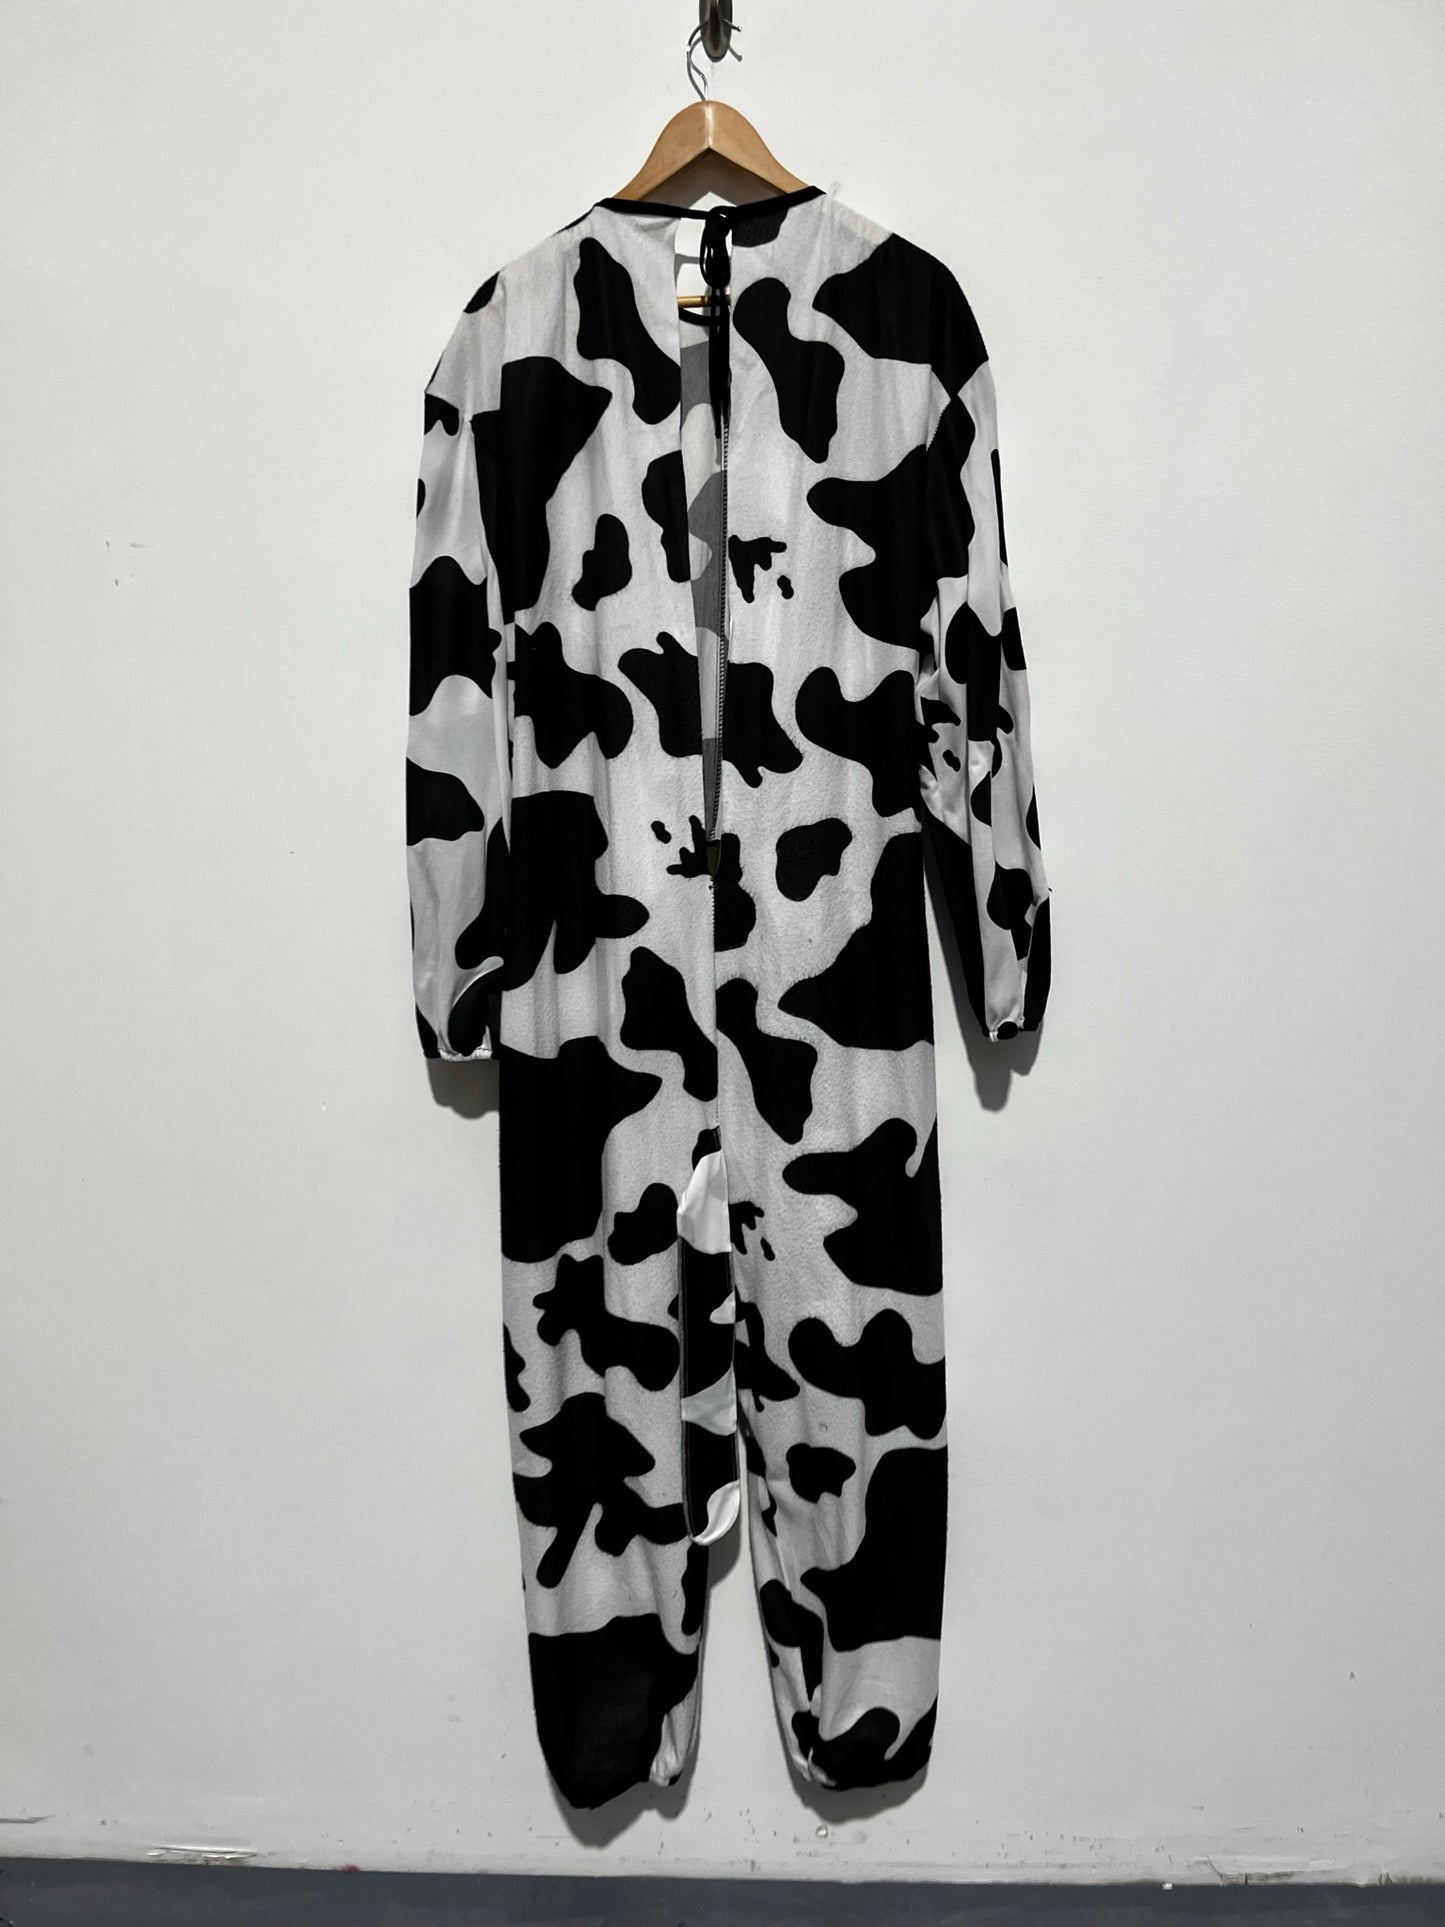 Black White Cow Costume Standard Size - Ex Hire